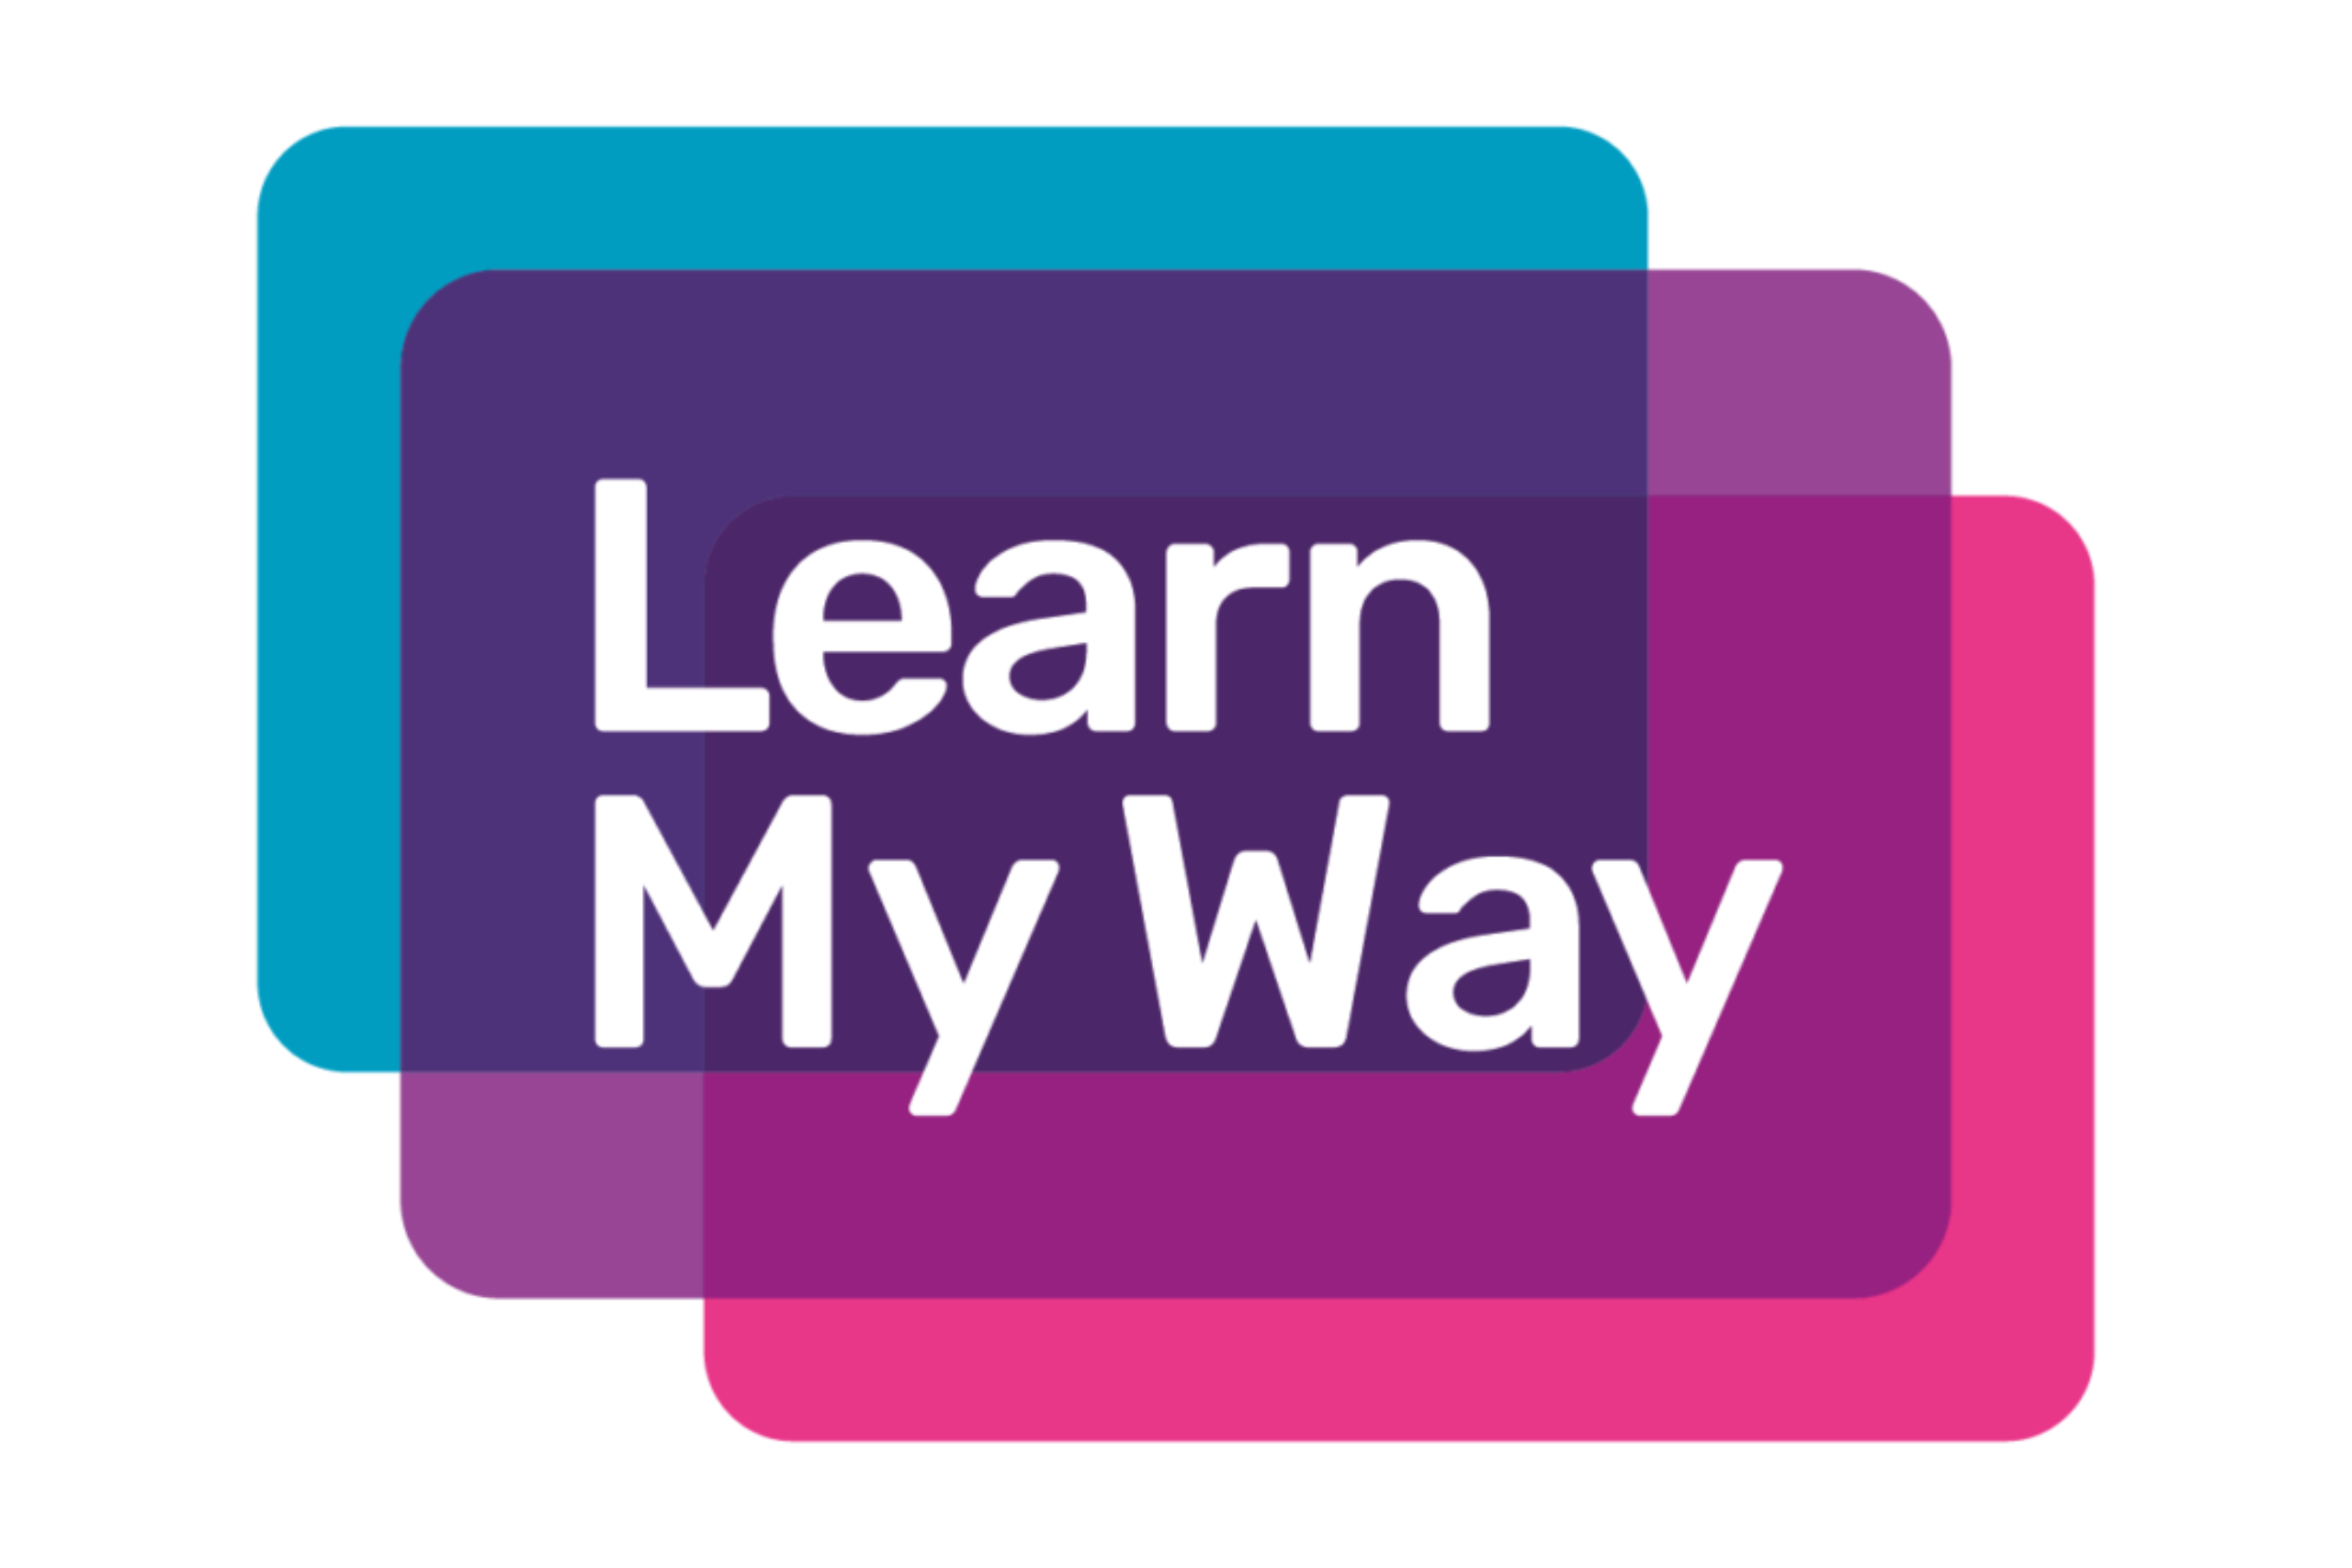 Learn My Way logo